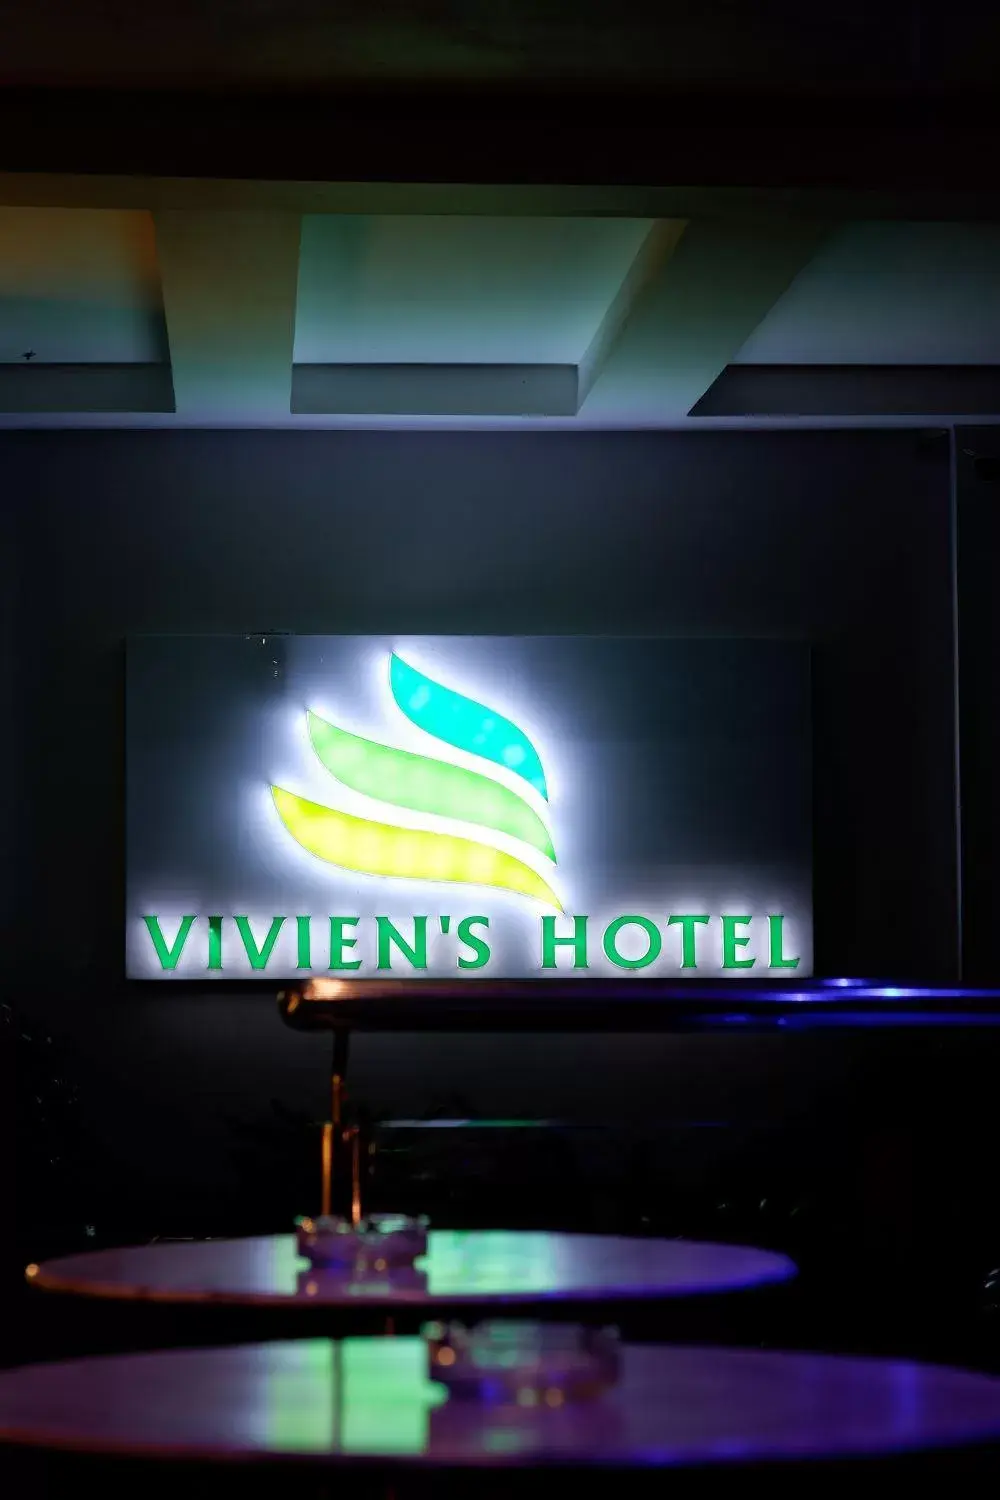 Property logo or sign in Vivien's Hotel